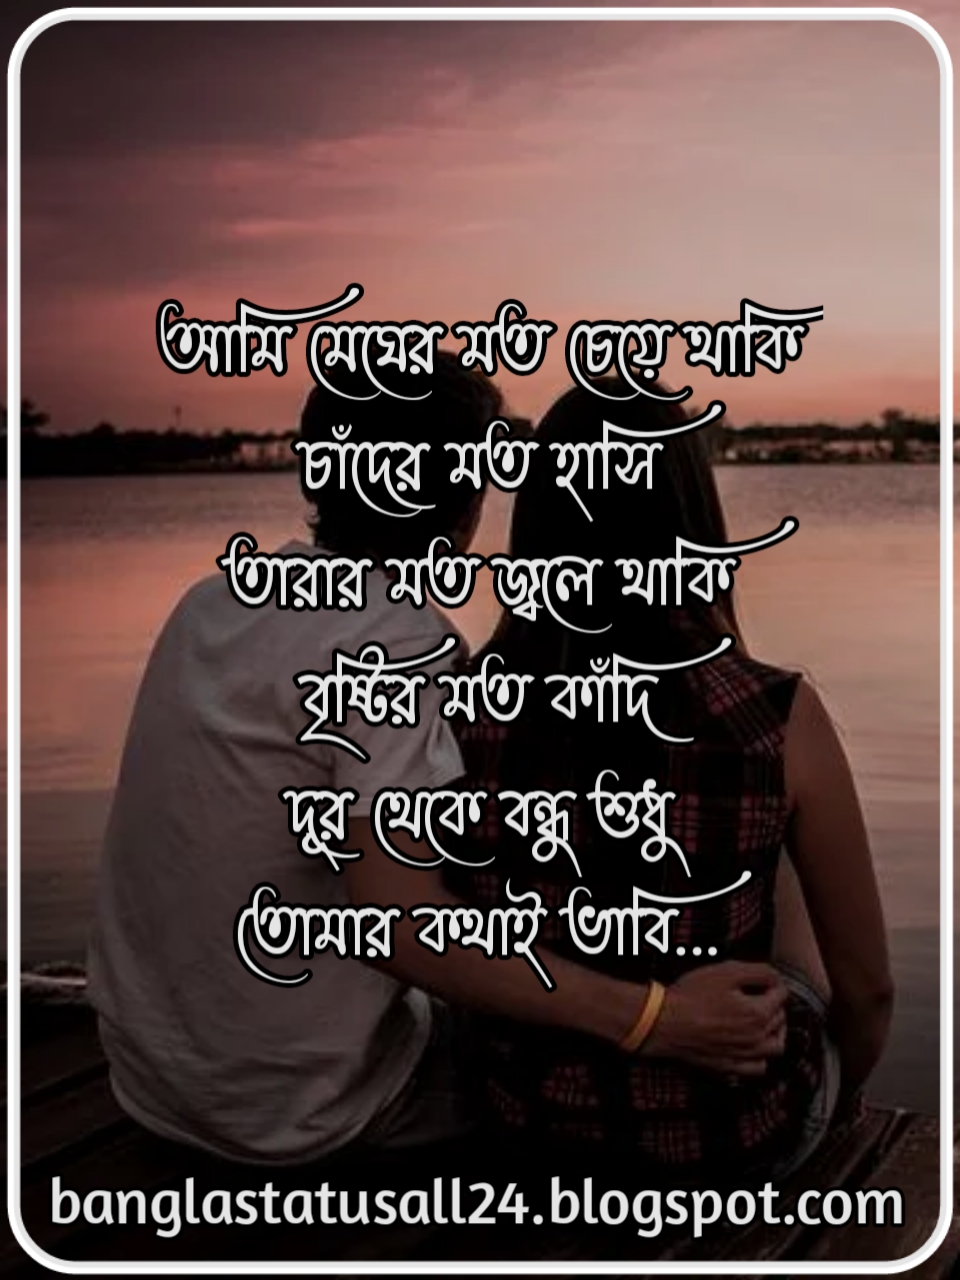 Bangla love status pic, love caption, bangla love quotes, facebook caption, প্রেমের ছন্দ, ছন্দ লেখা ছবি, bangla chondo picture